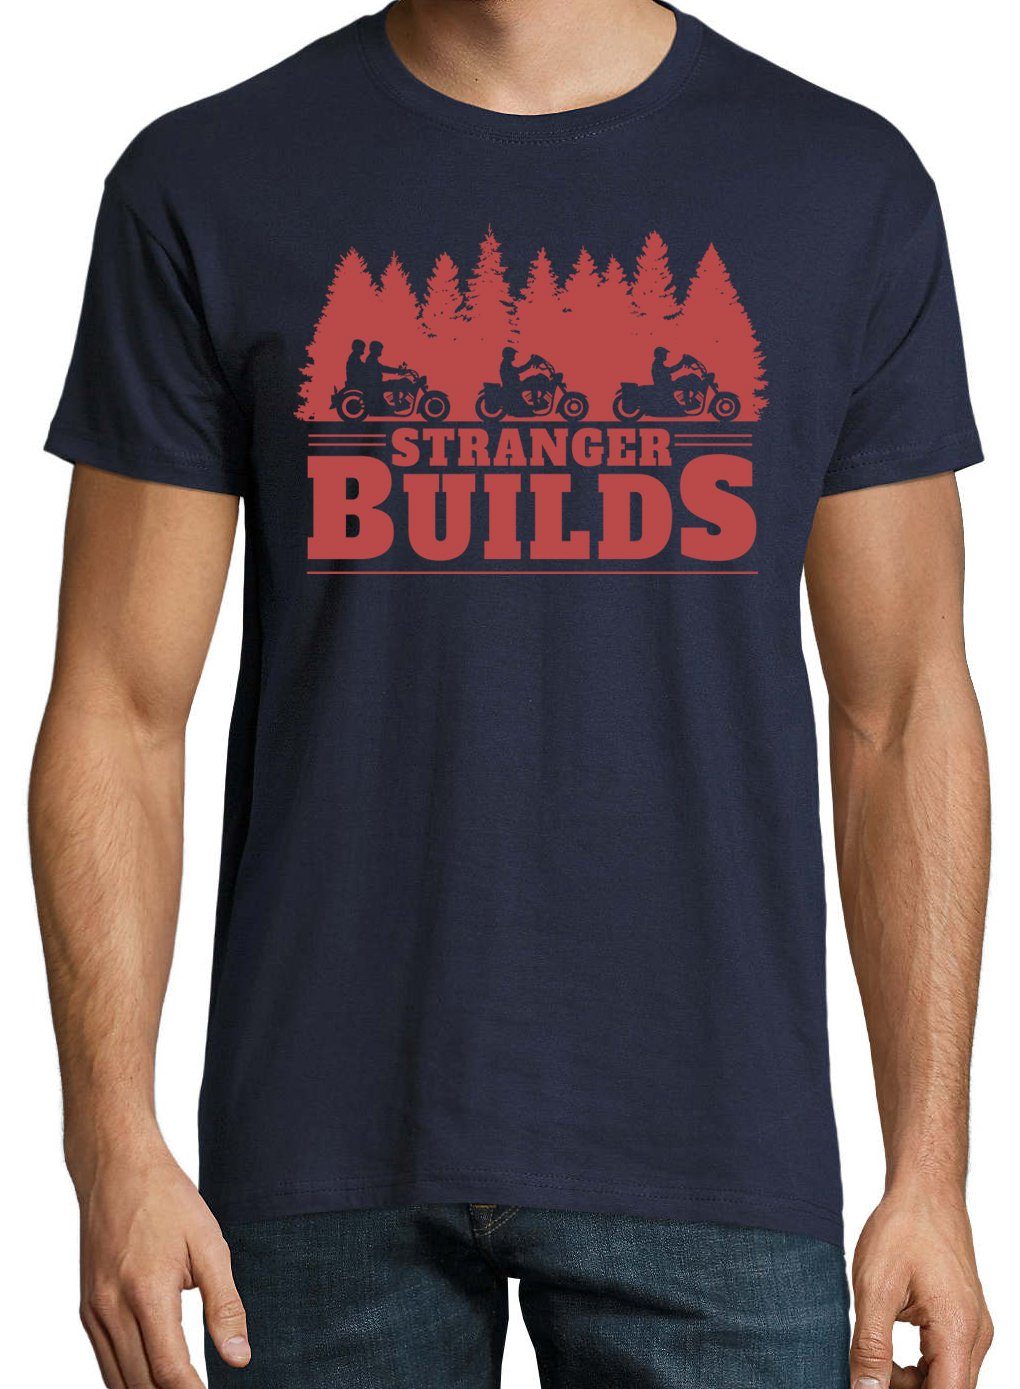 Frontprint mit trendigem Shirt Herren Navyblau Stranger T-Shirt Youth Builds Designz